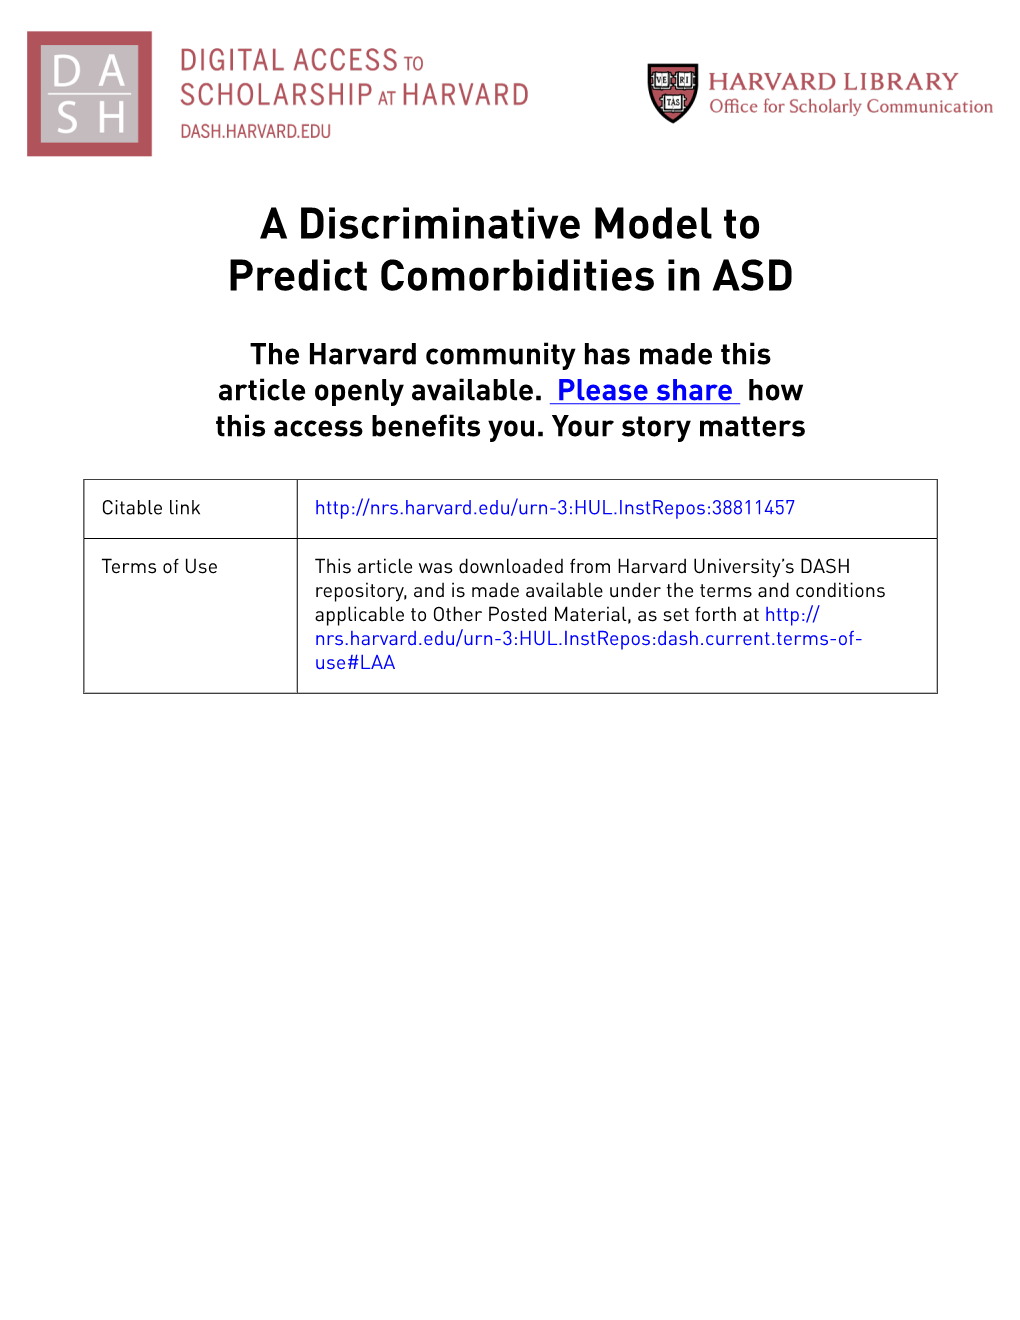 A Discriminative Model to Predict Comorbidities in ASD